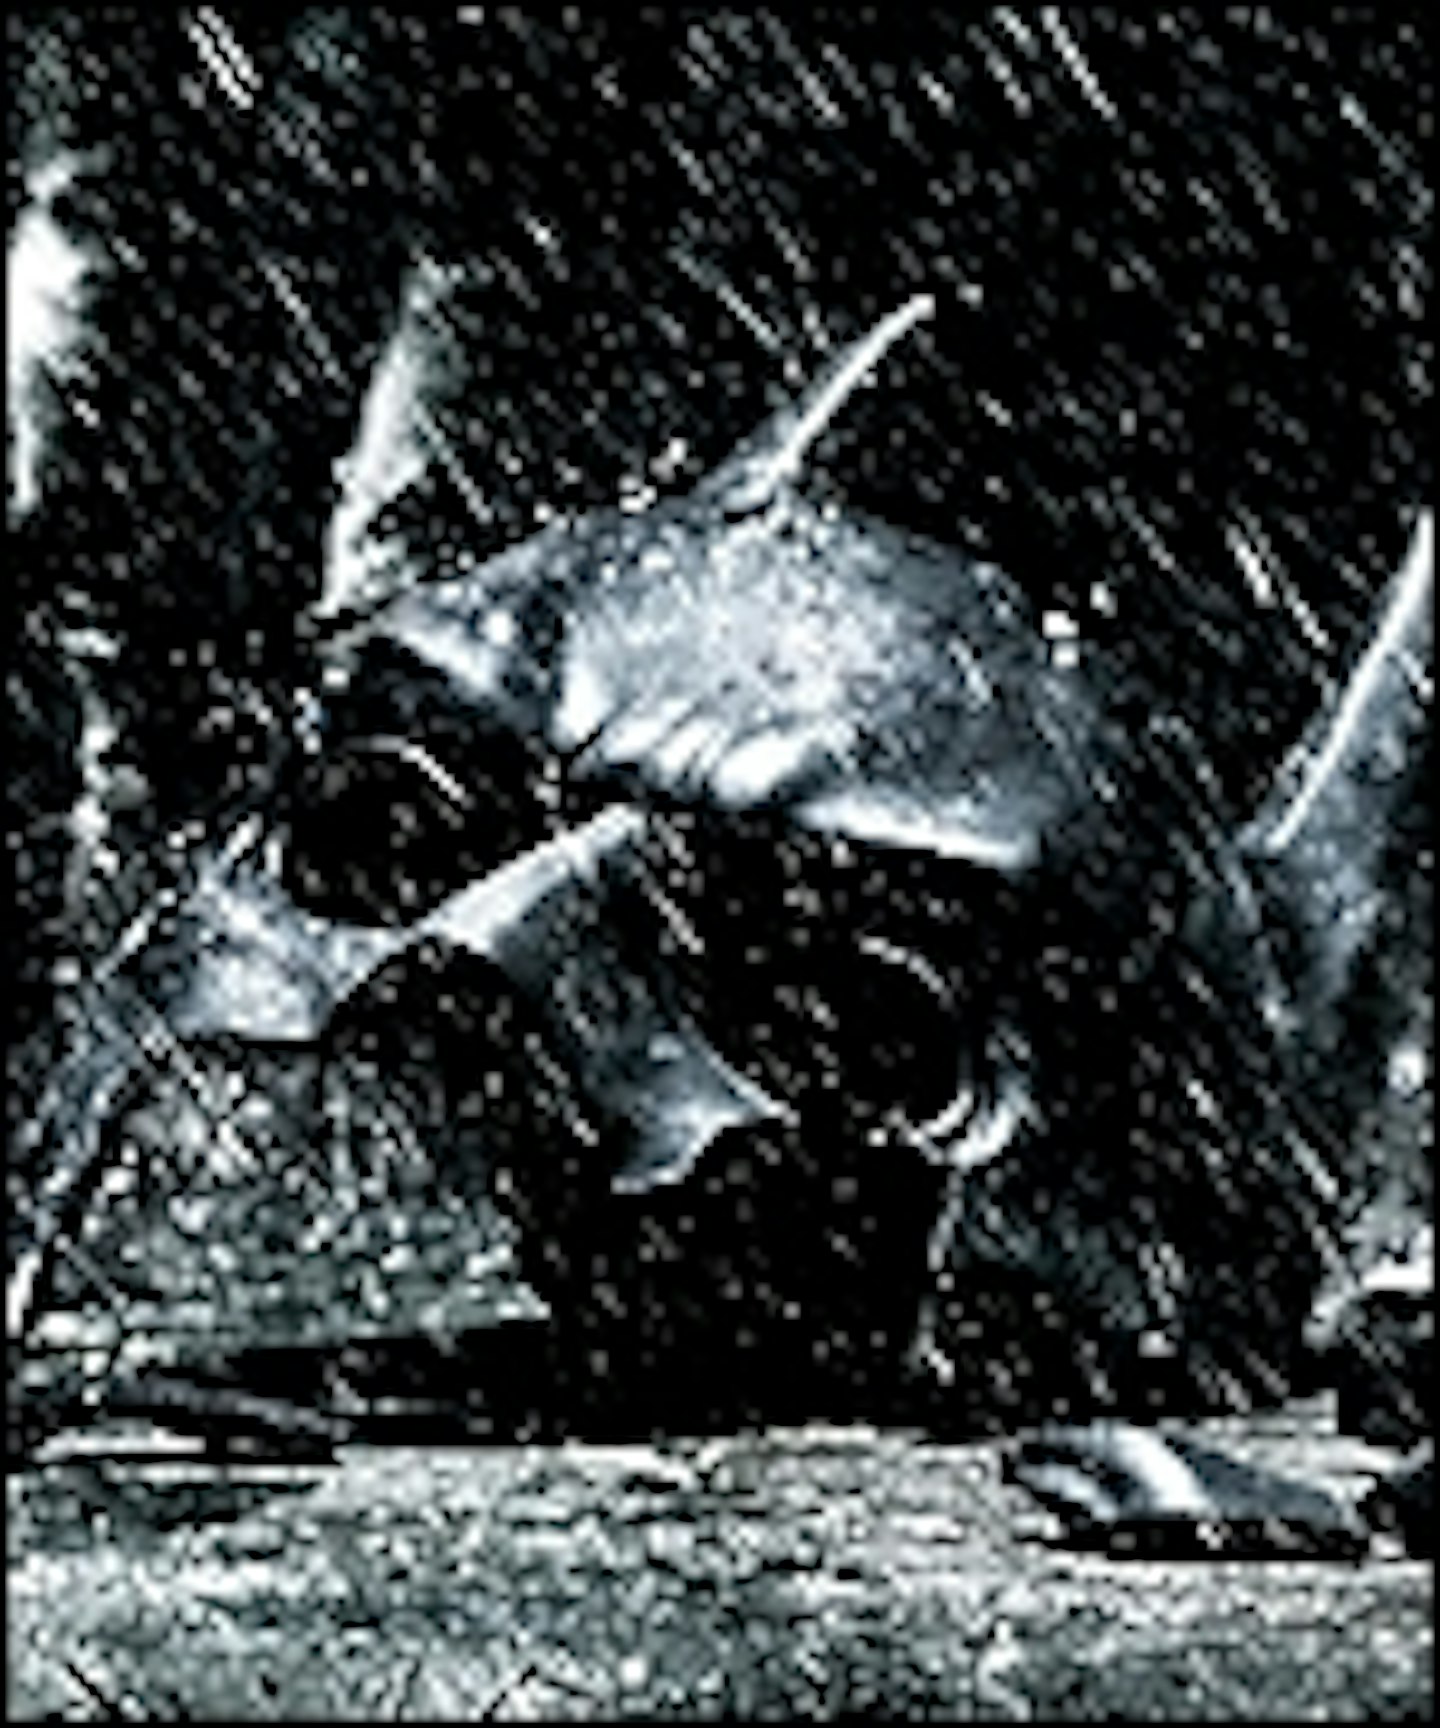 New Dark Knight Rises Teaser Poster